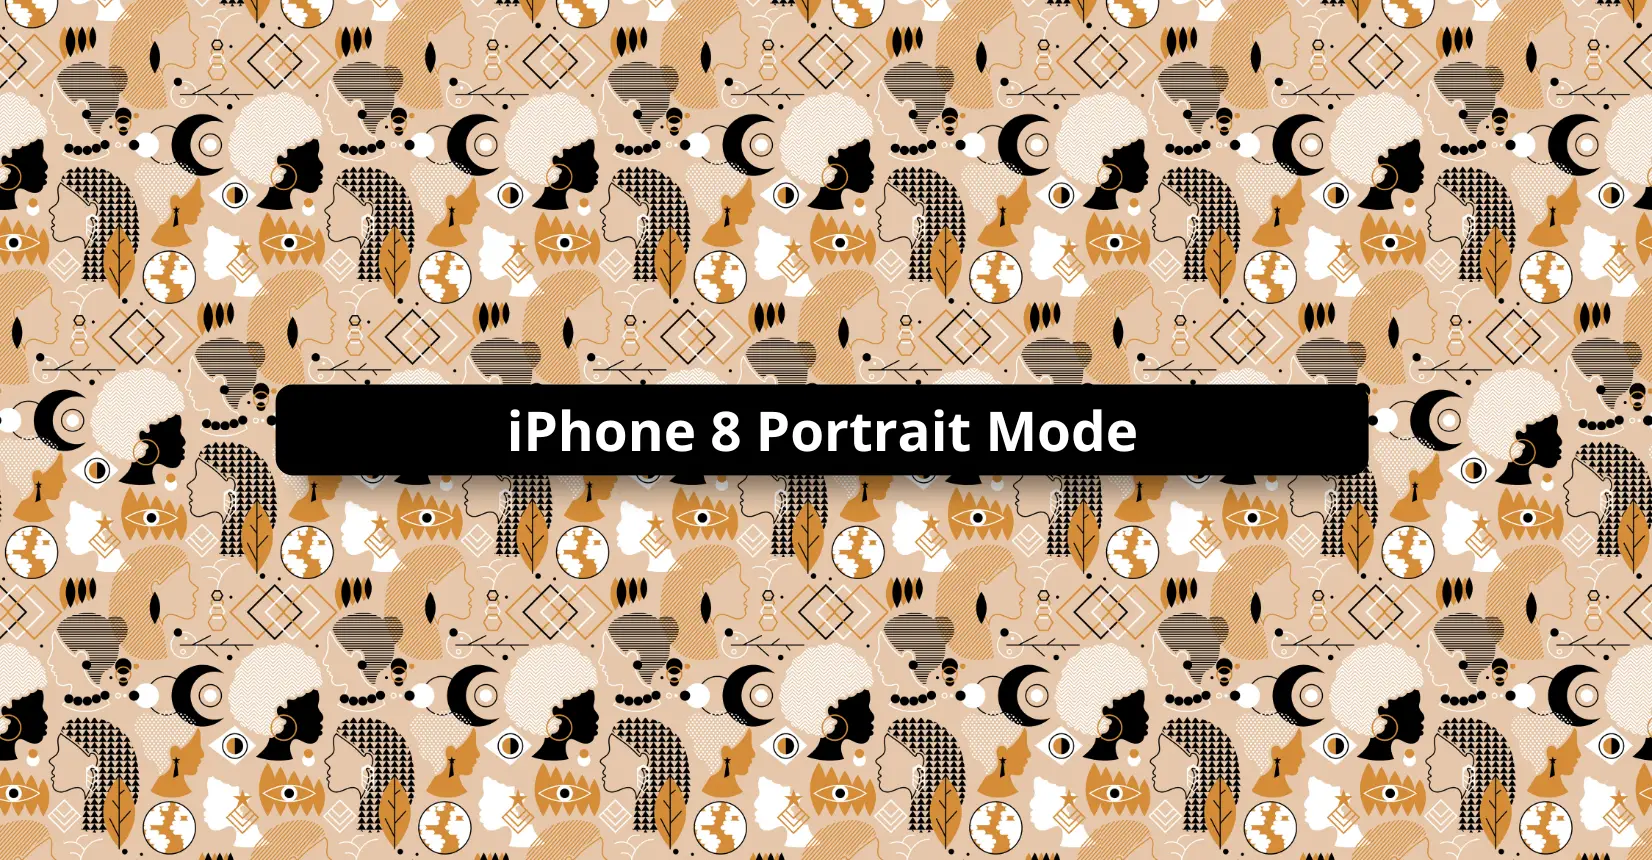 iPhone 8 Portrait Mode